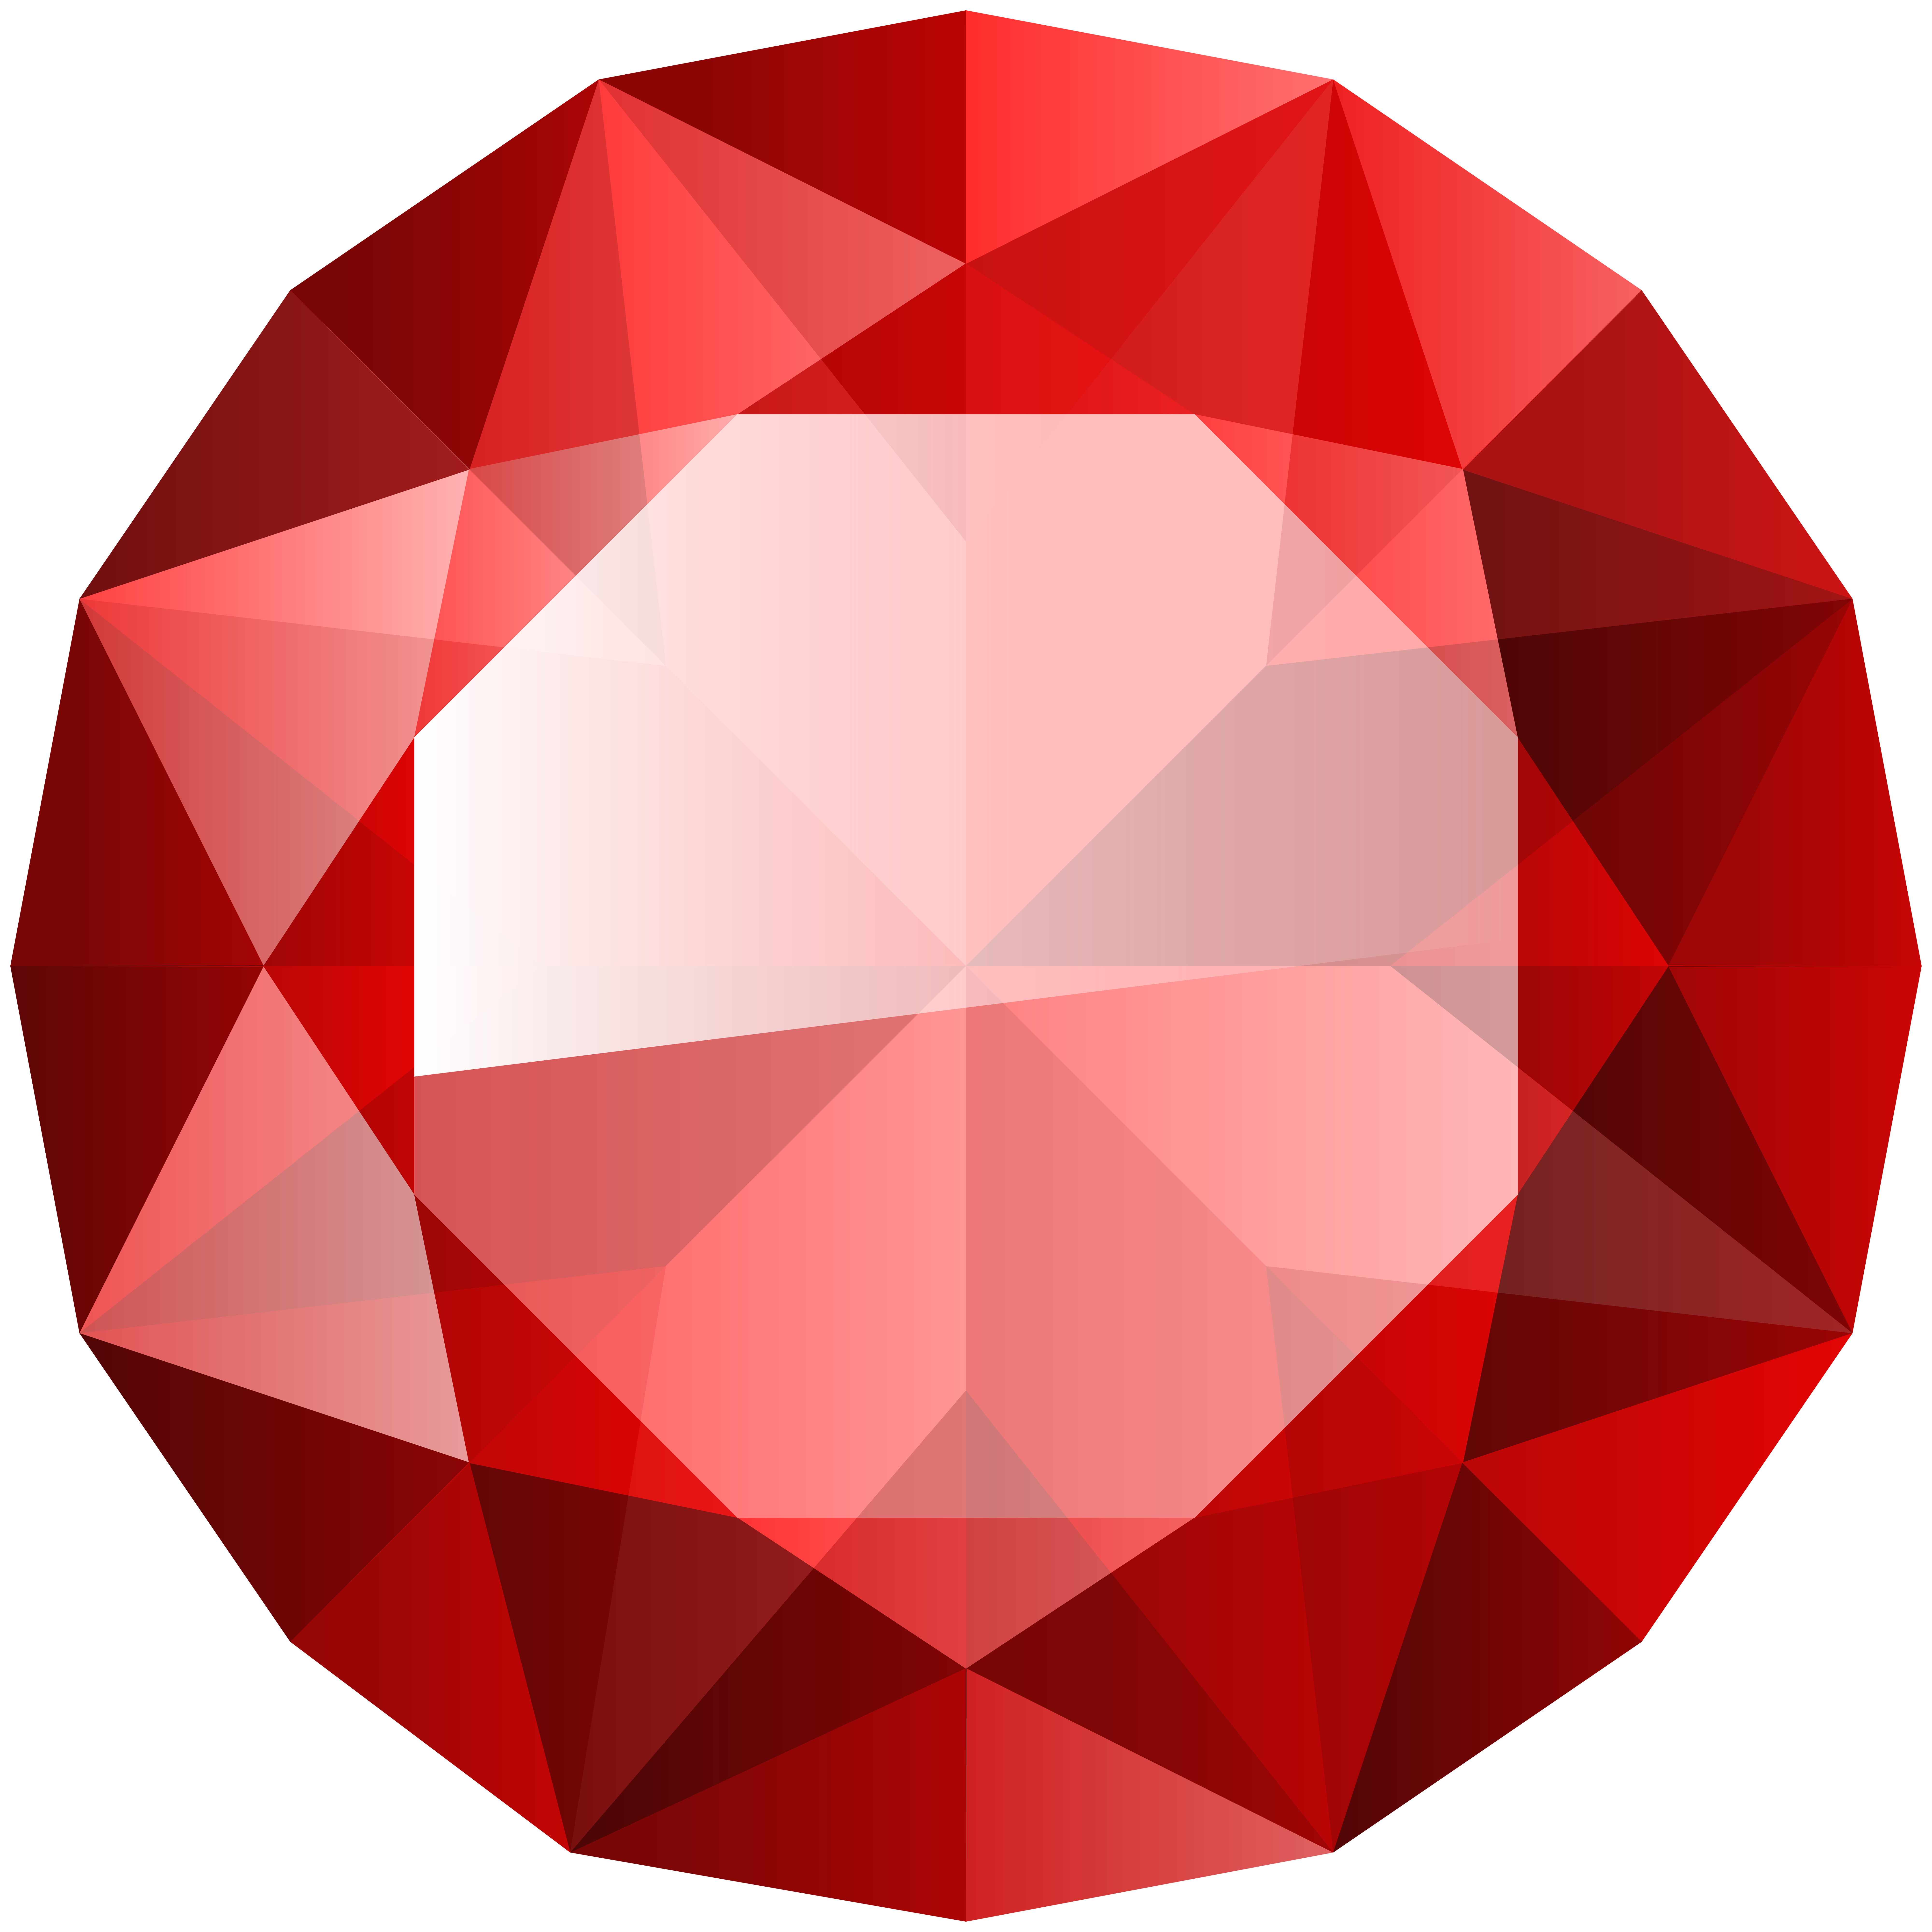 Diamond clipart red diamond. Transparent clip art image